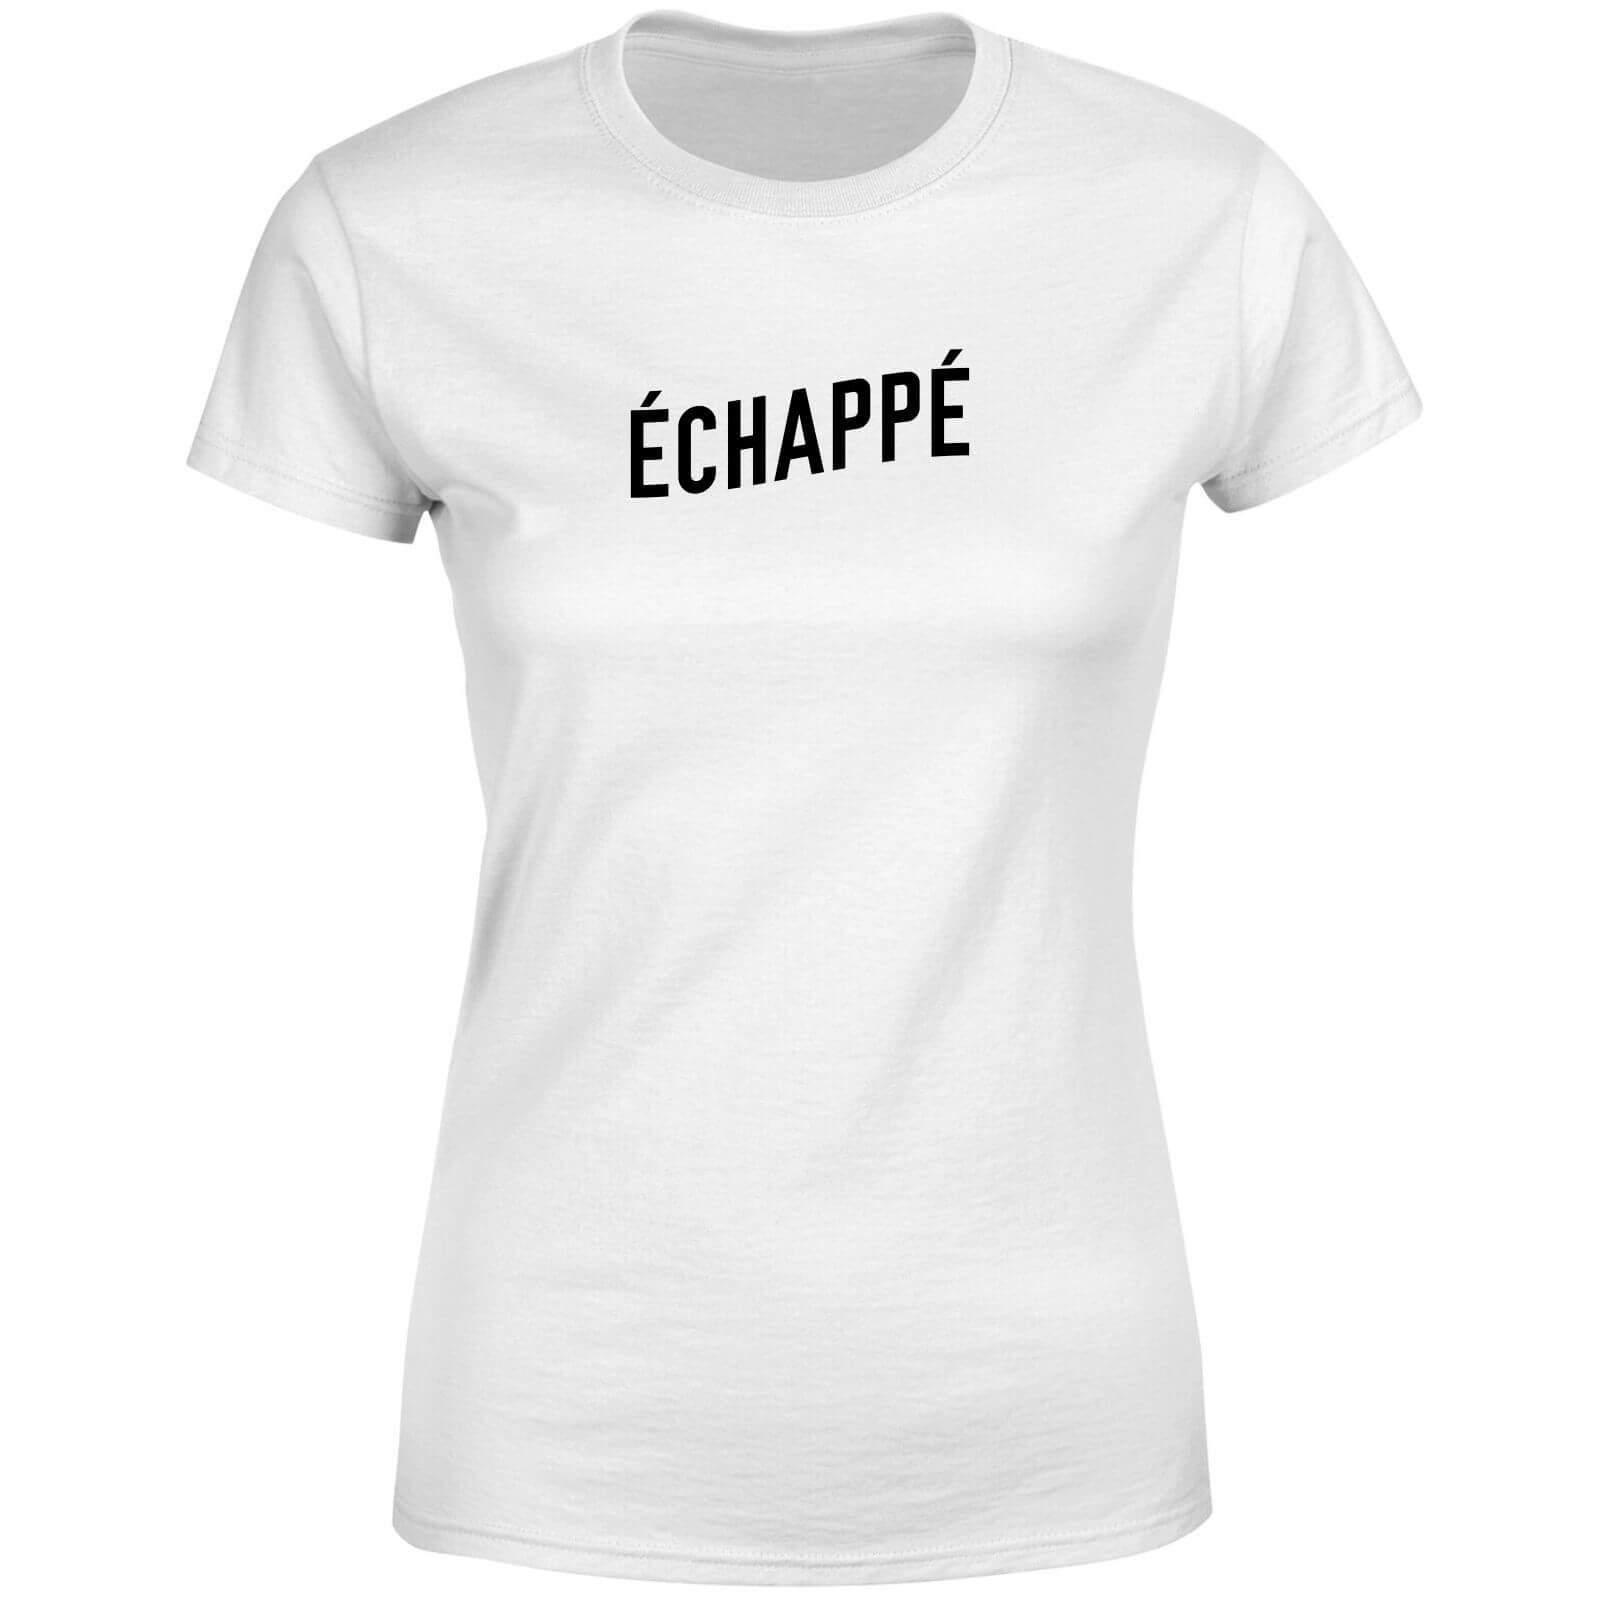 Echappe Women's T-Shirt - White - XS - White